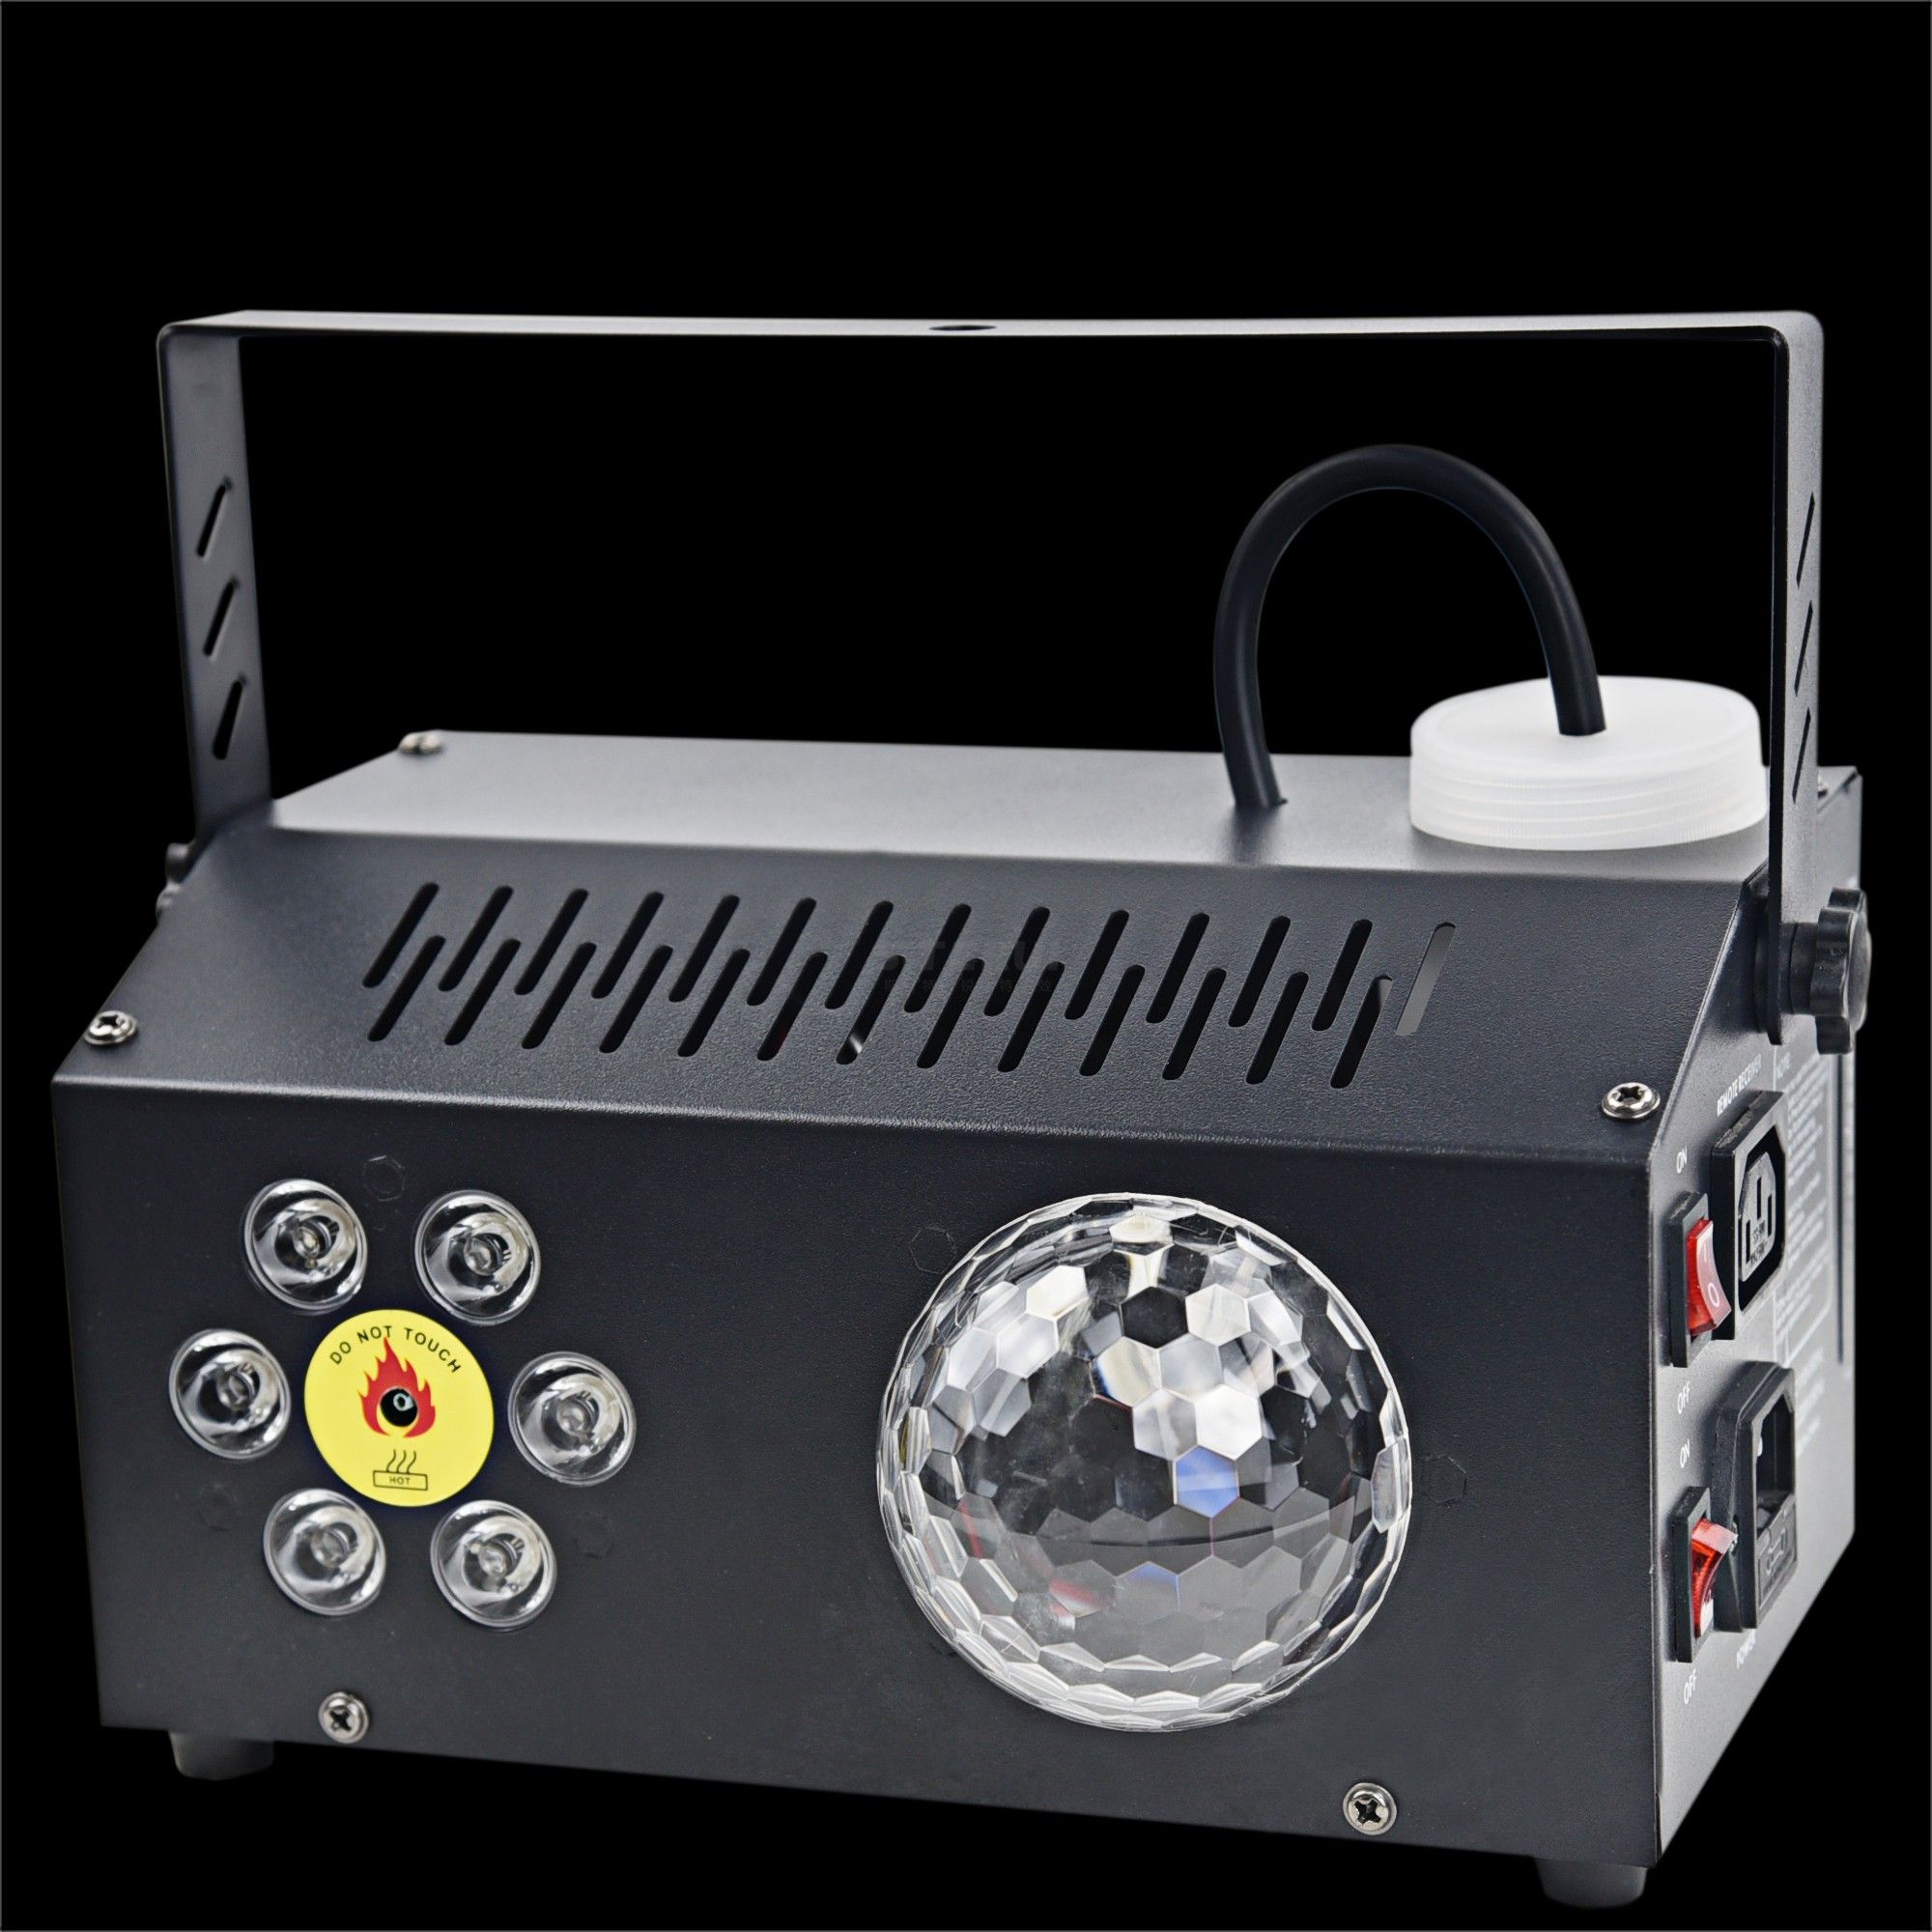 700w LED fog machine with magic ball light